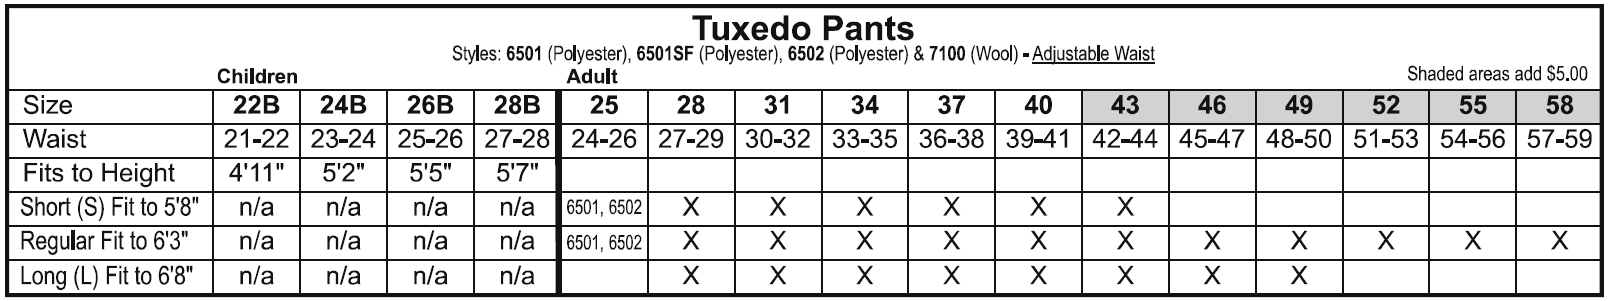 Tuxedo Pants Size Chart